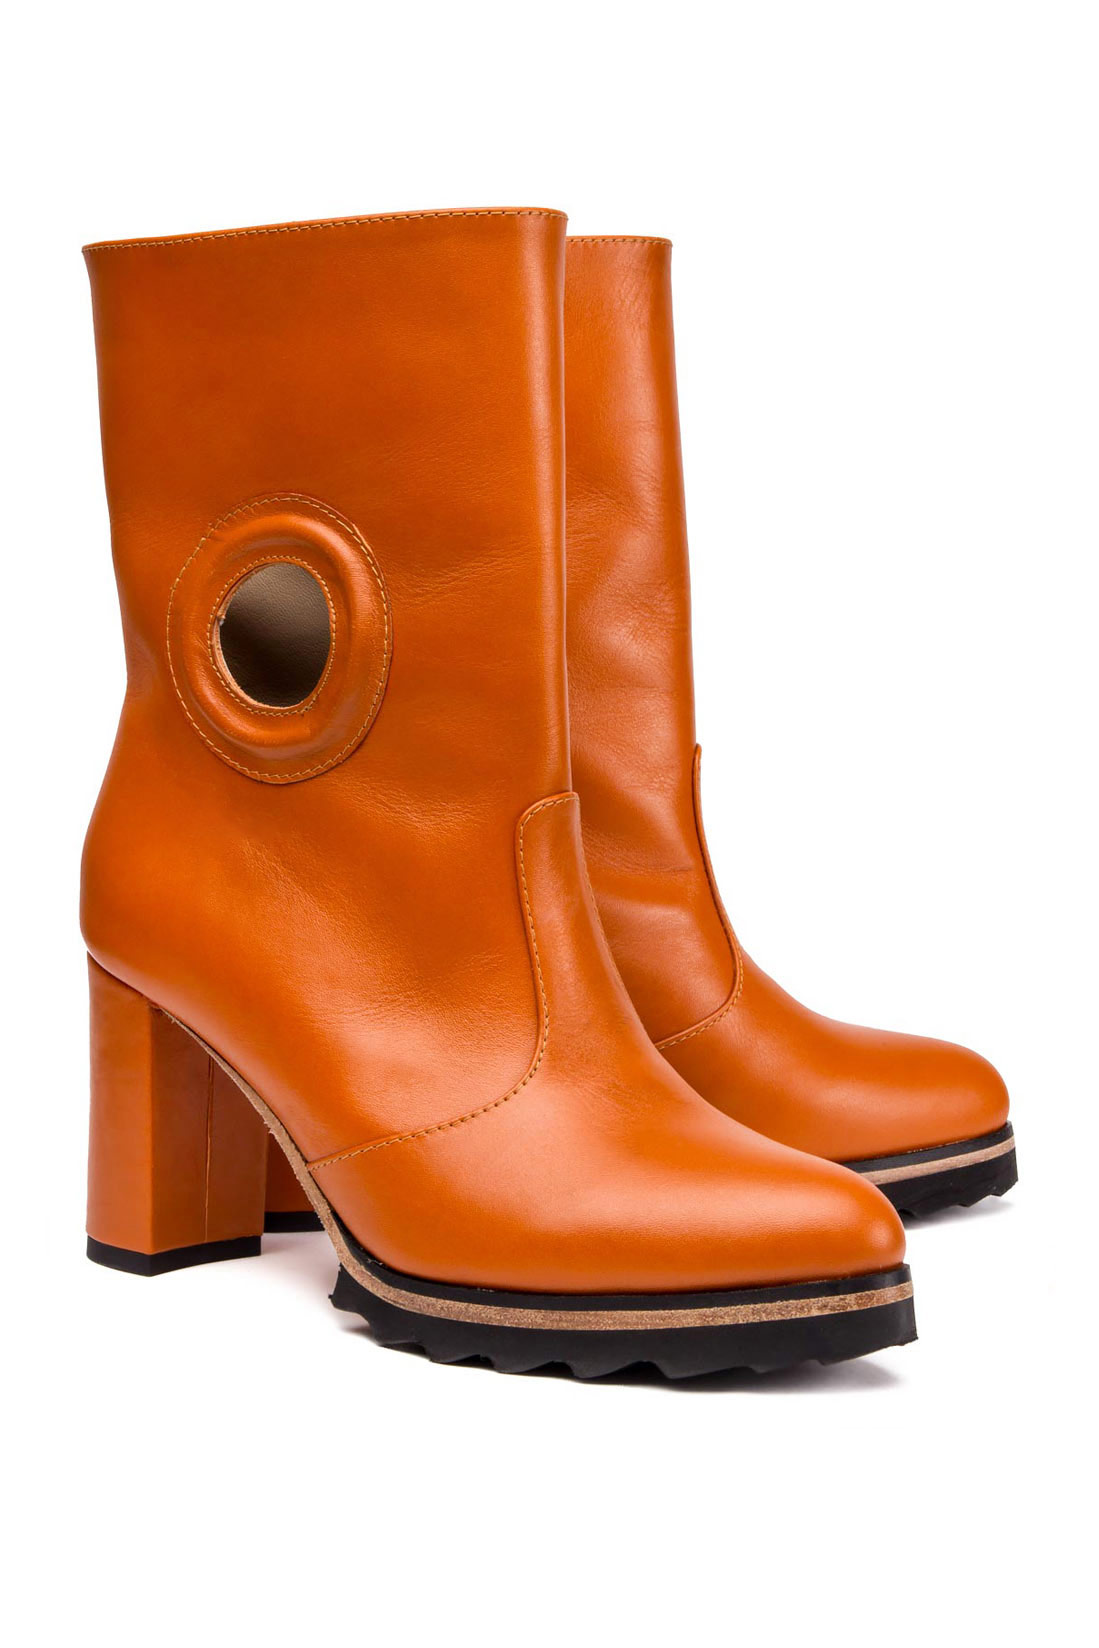 Leather boots with decoupage Mihaela Glavan  image 1